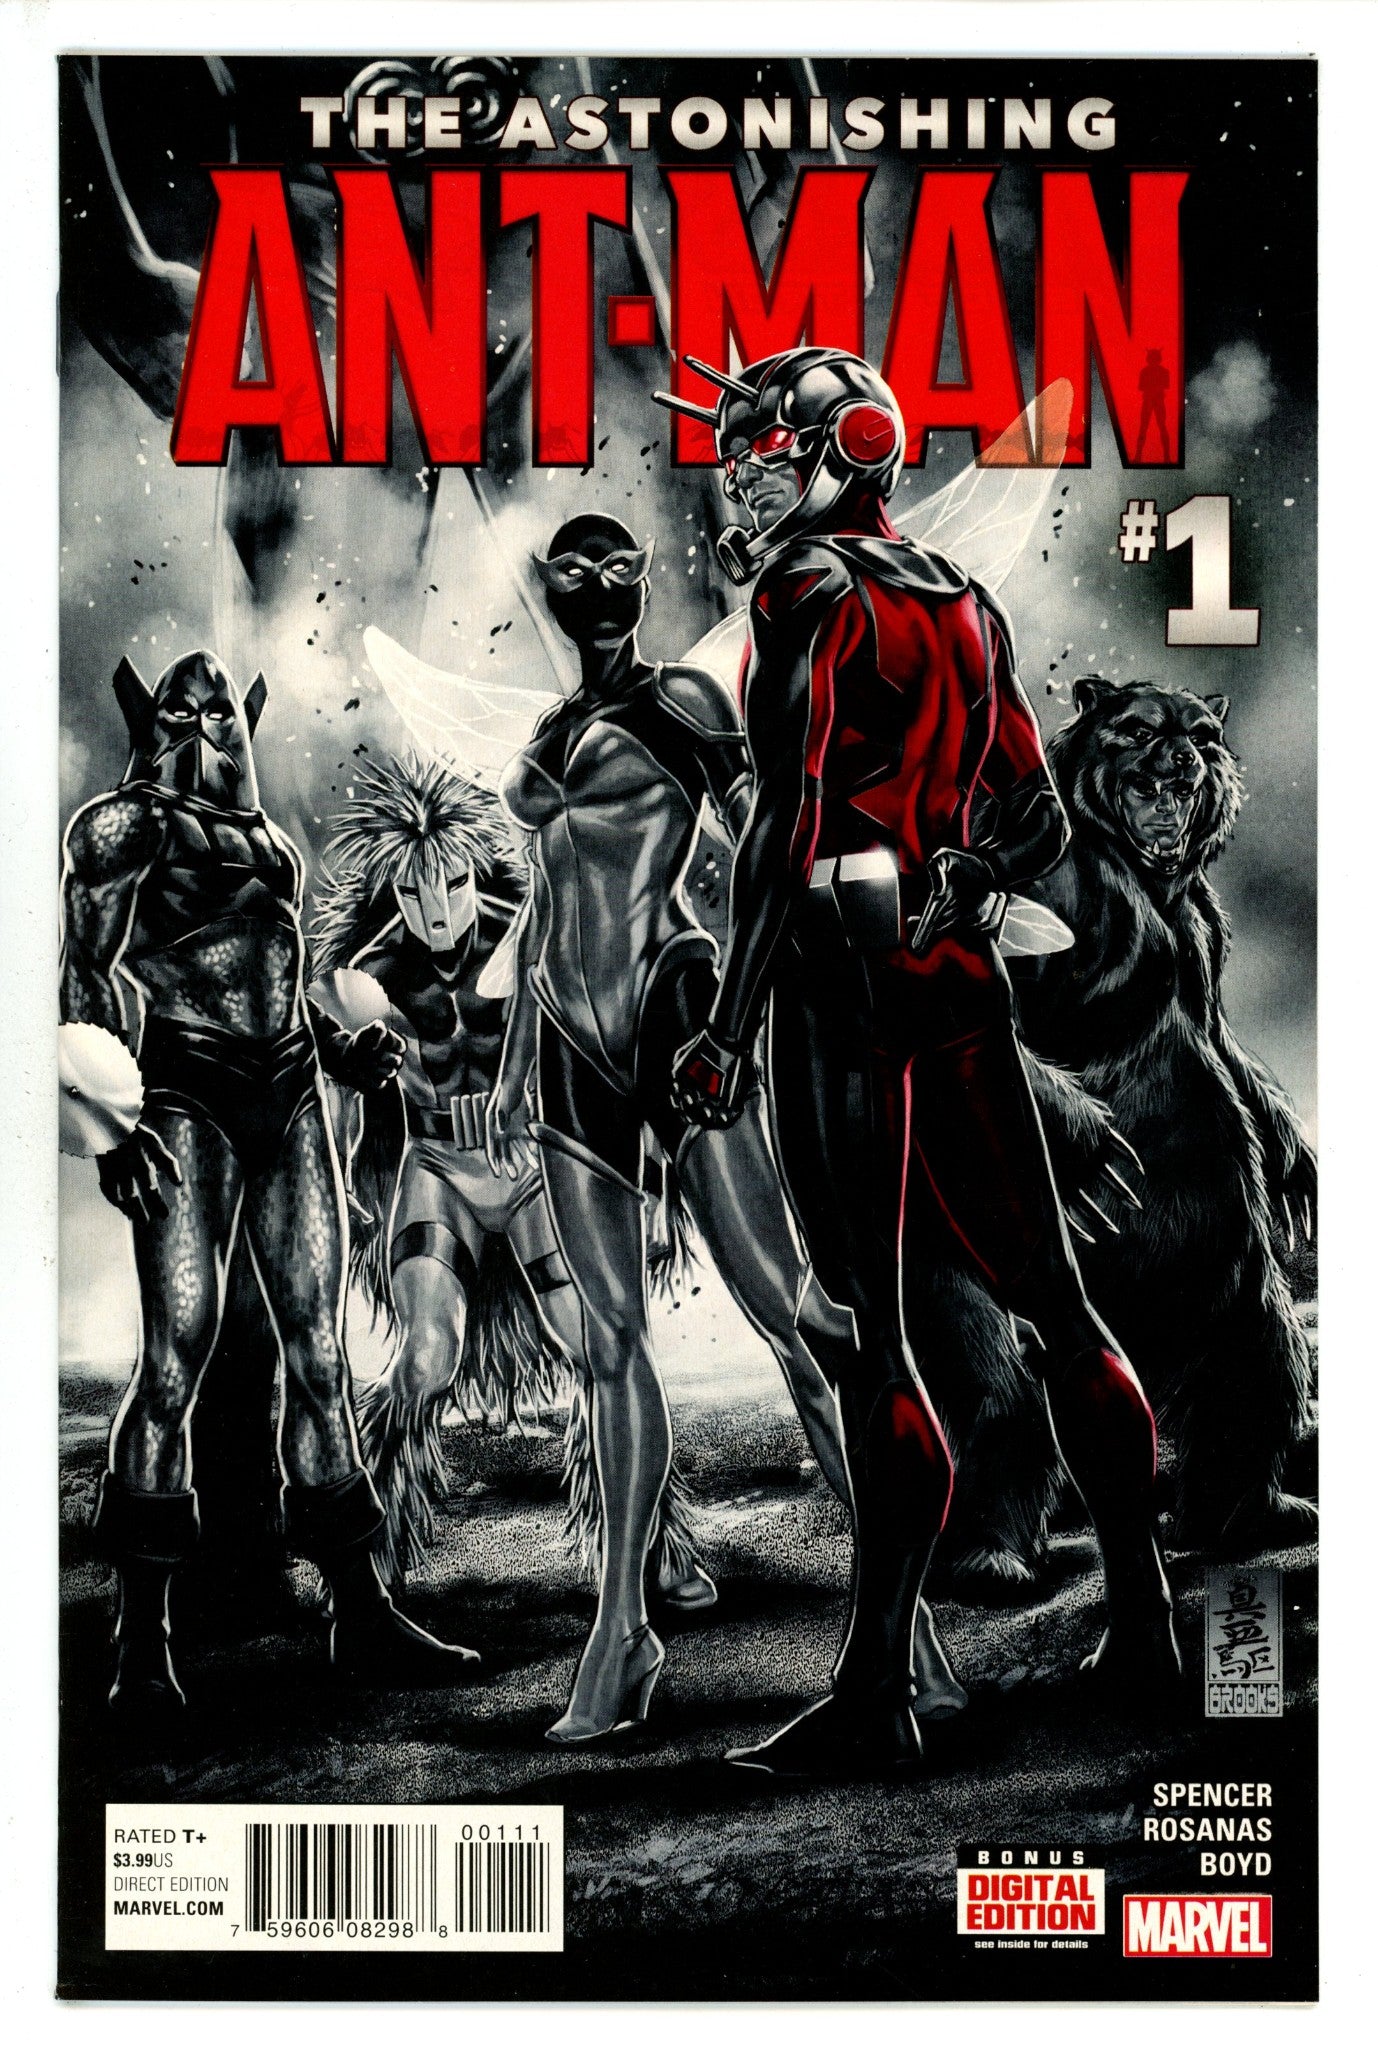 The Astonishing Ant-Man Vol 1 1 (2015)